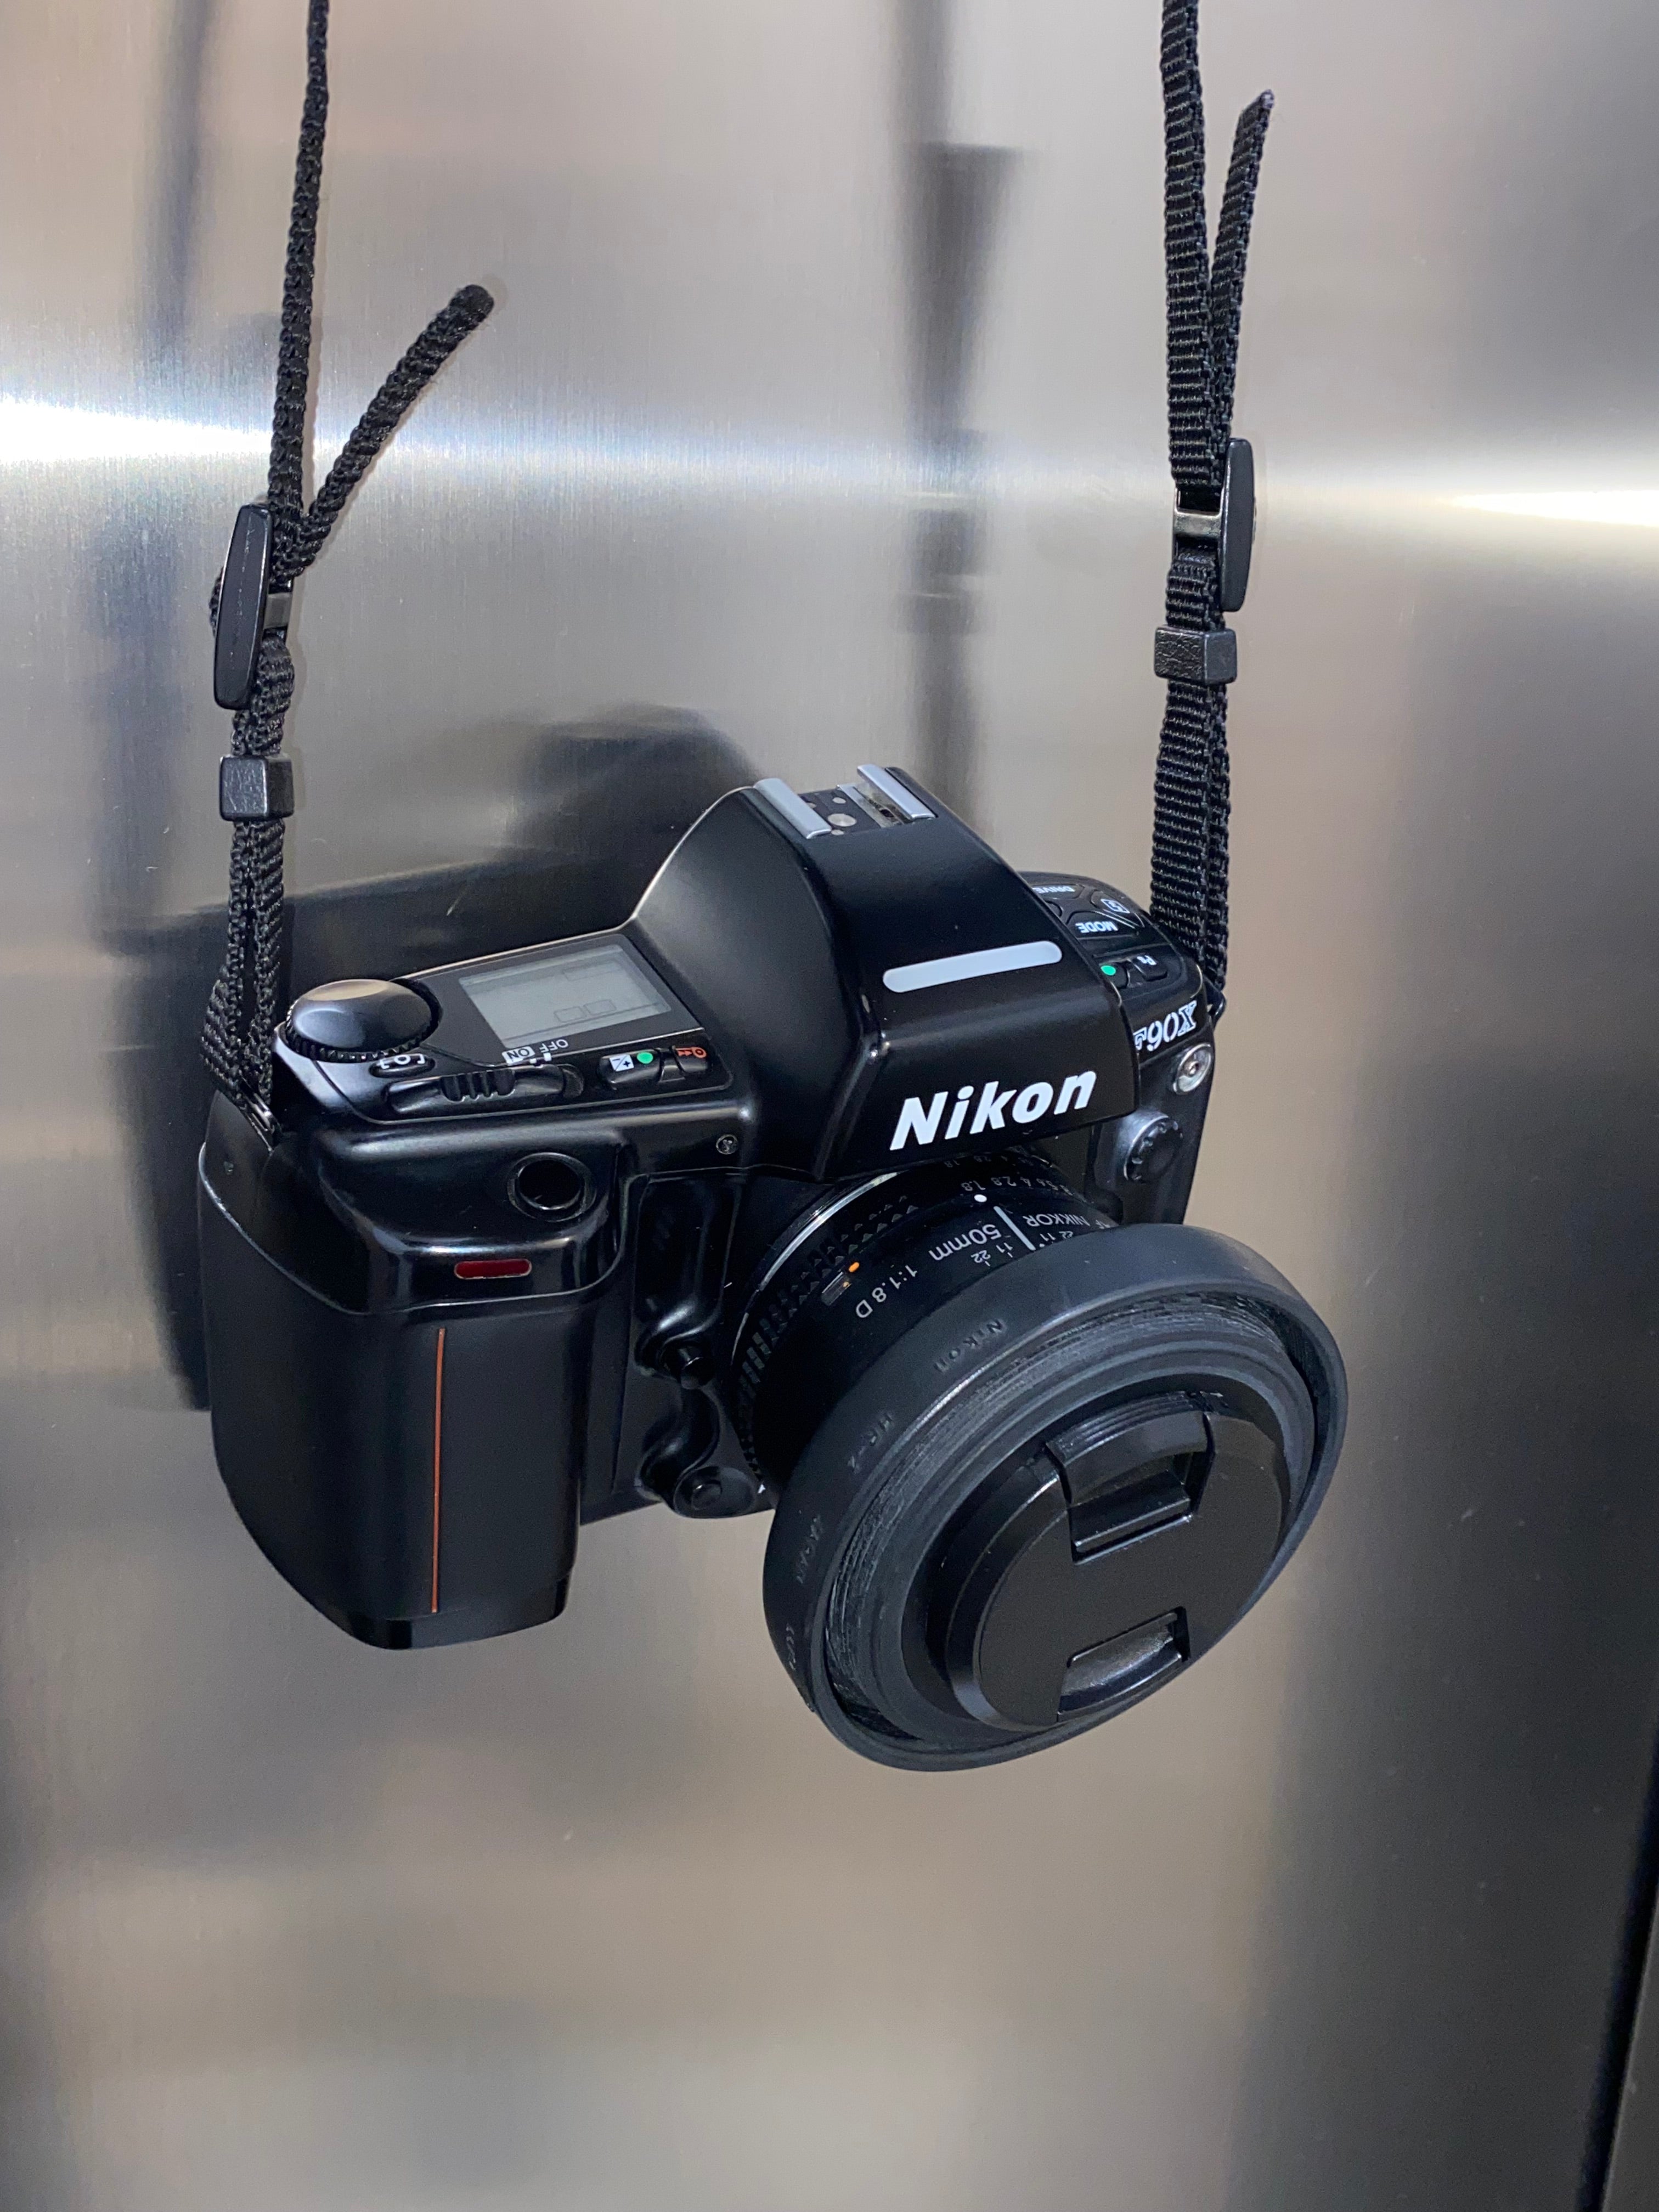 Nikon F90X x Nikkor lens 50mm | used film SLR camera 135 type